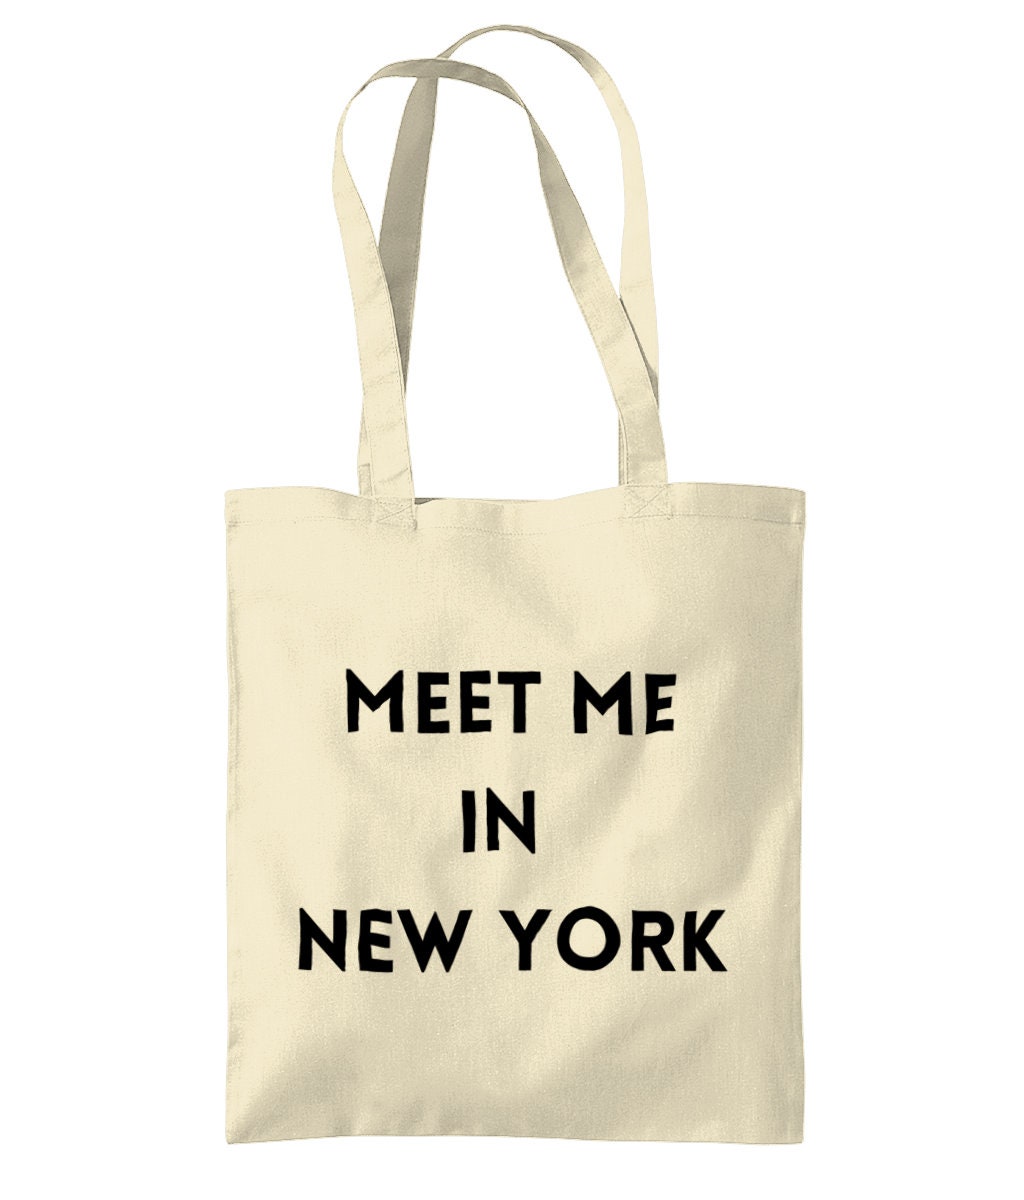 1 bag new. Сумка New York. Сумка Нью Йорк. Jones New York сумка. Vera New York сумки.